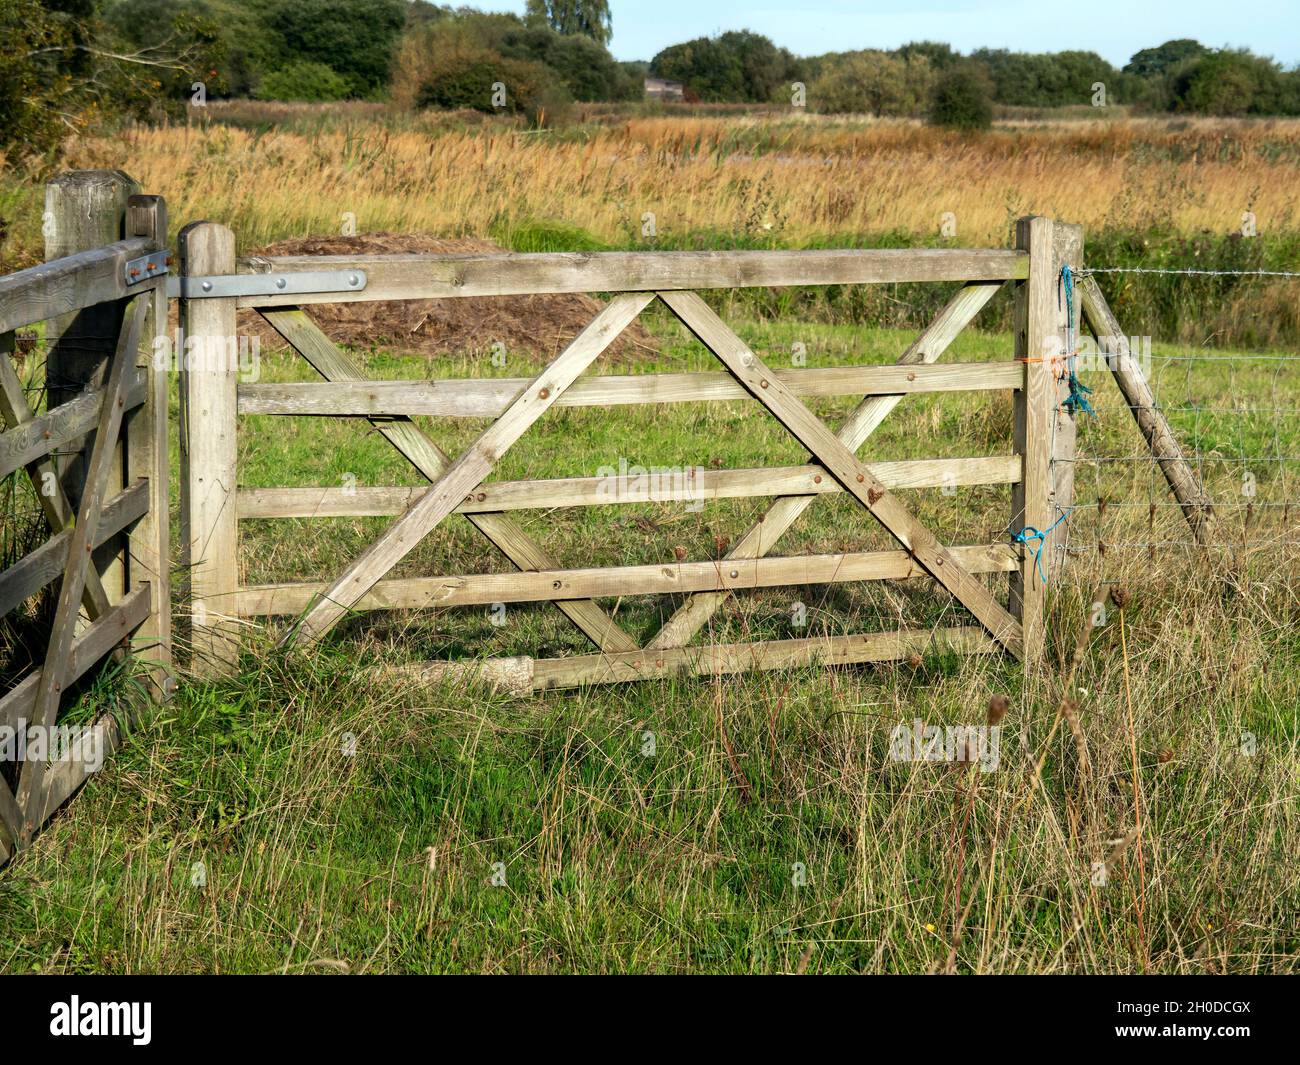 Wooden farm gate in a grassy field Stock Photo